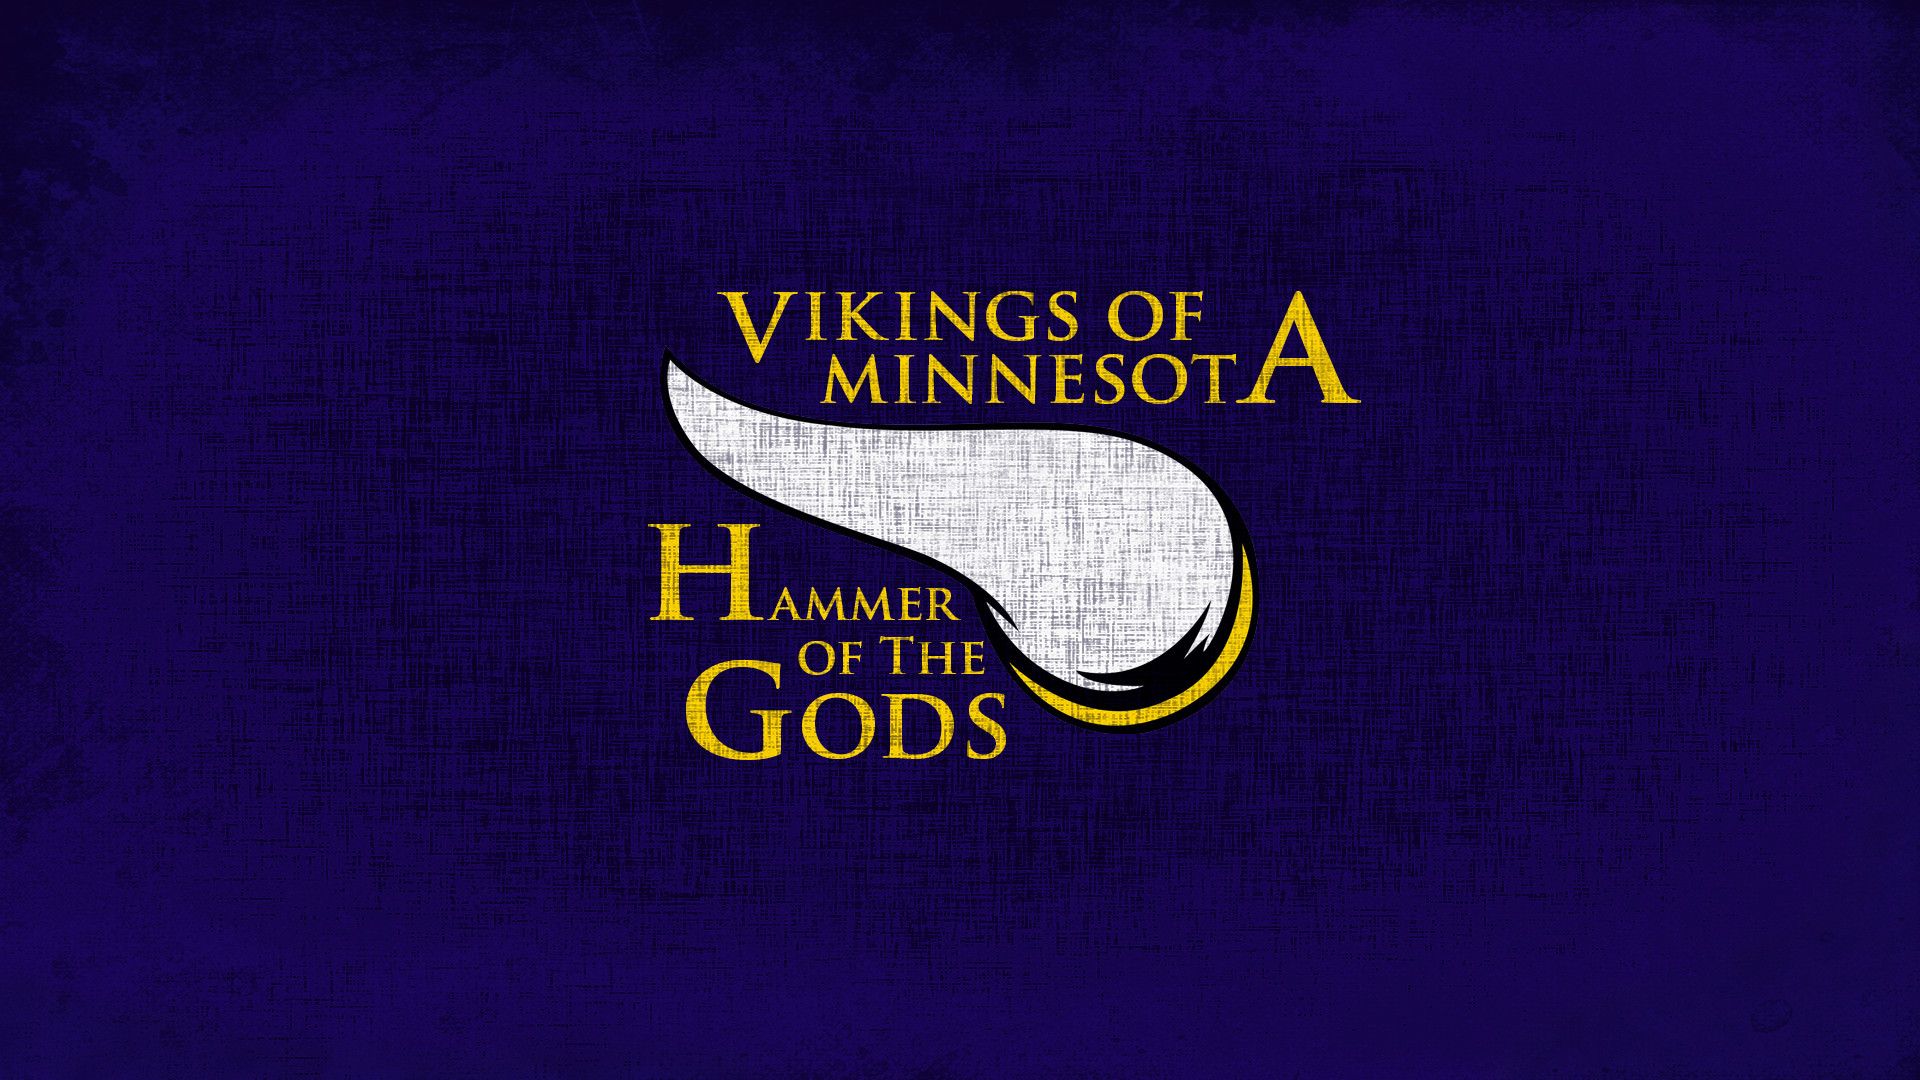 Minnesota Vikings Wallpaper Image And All